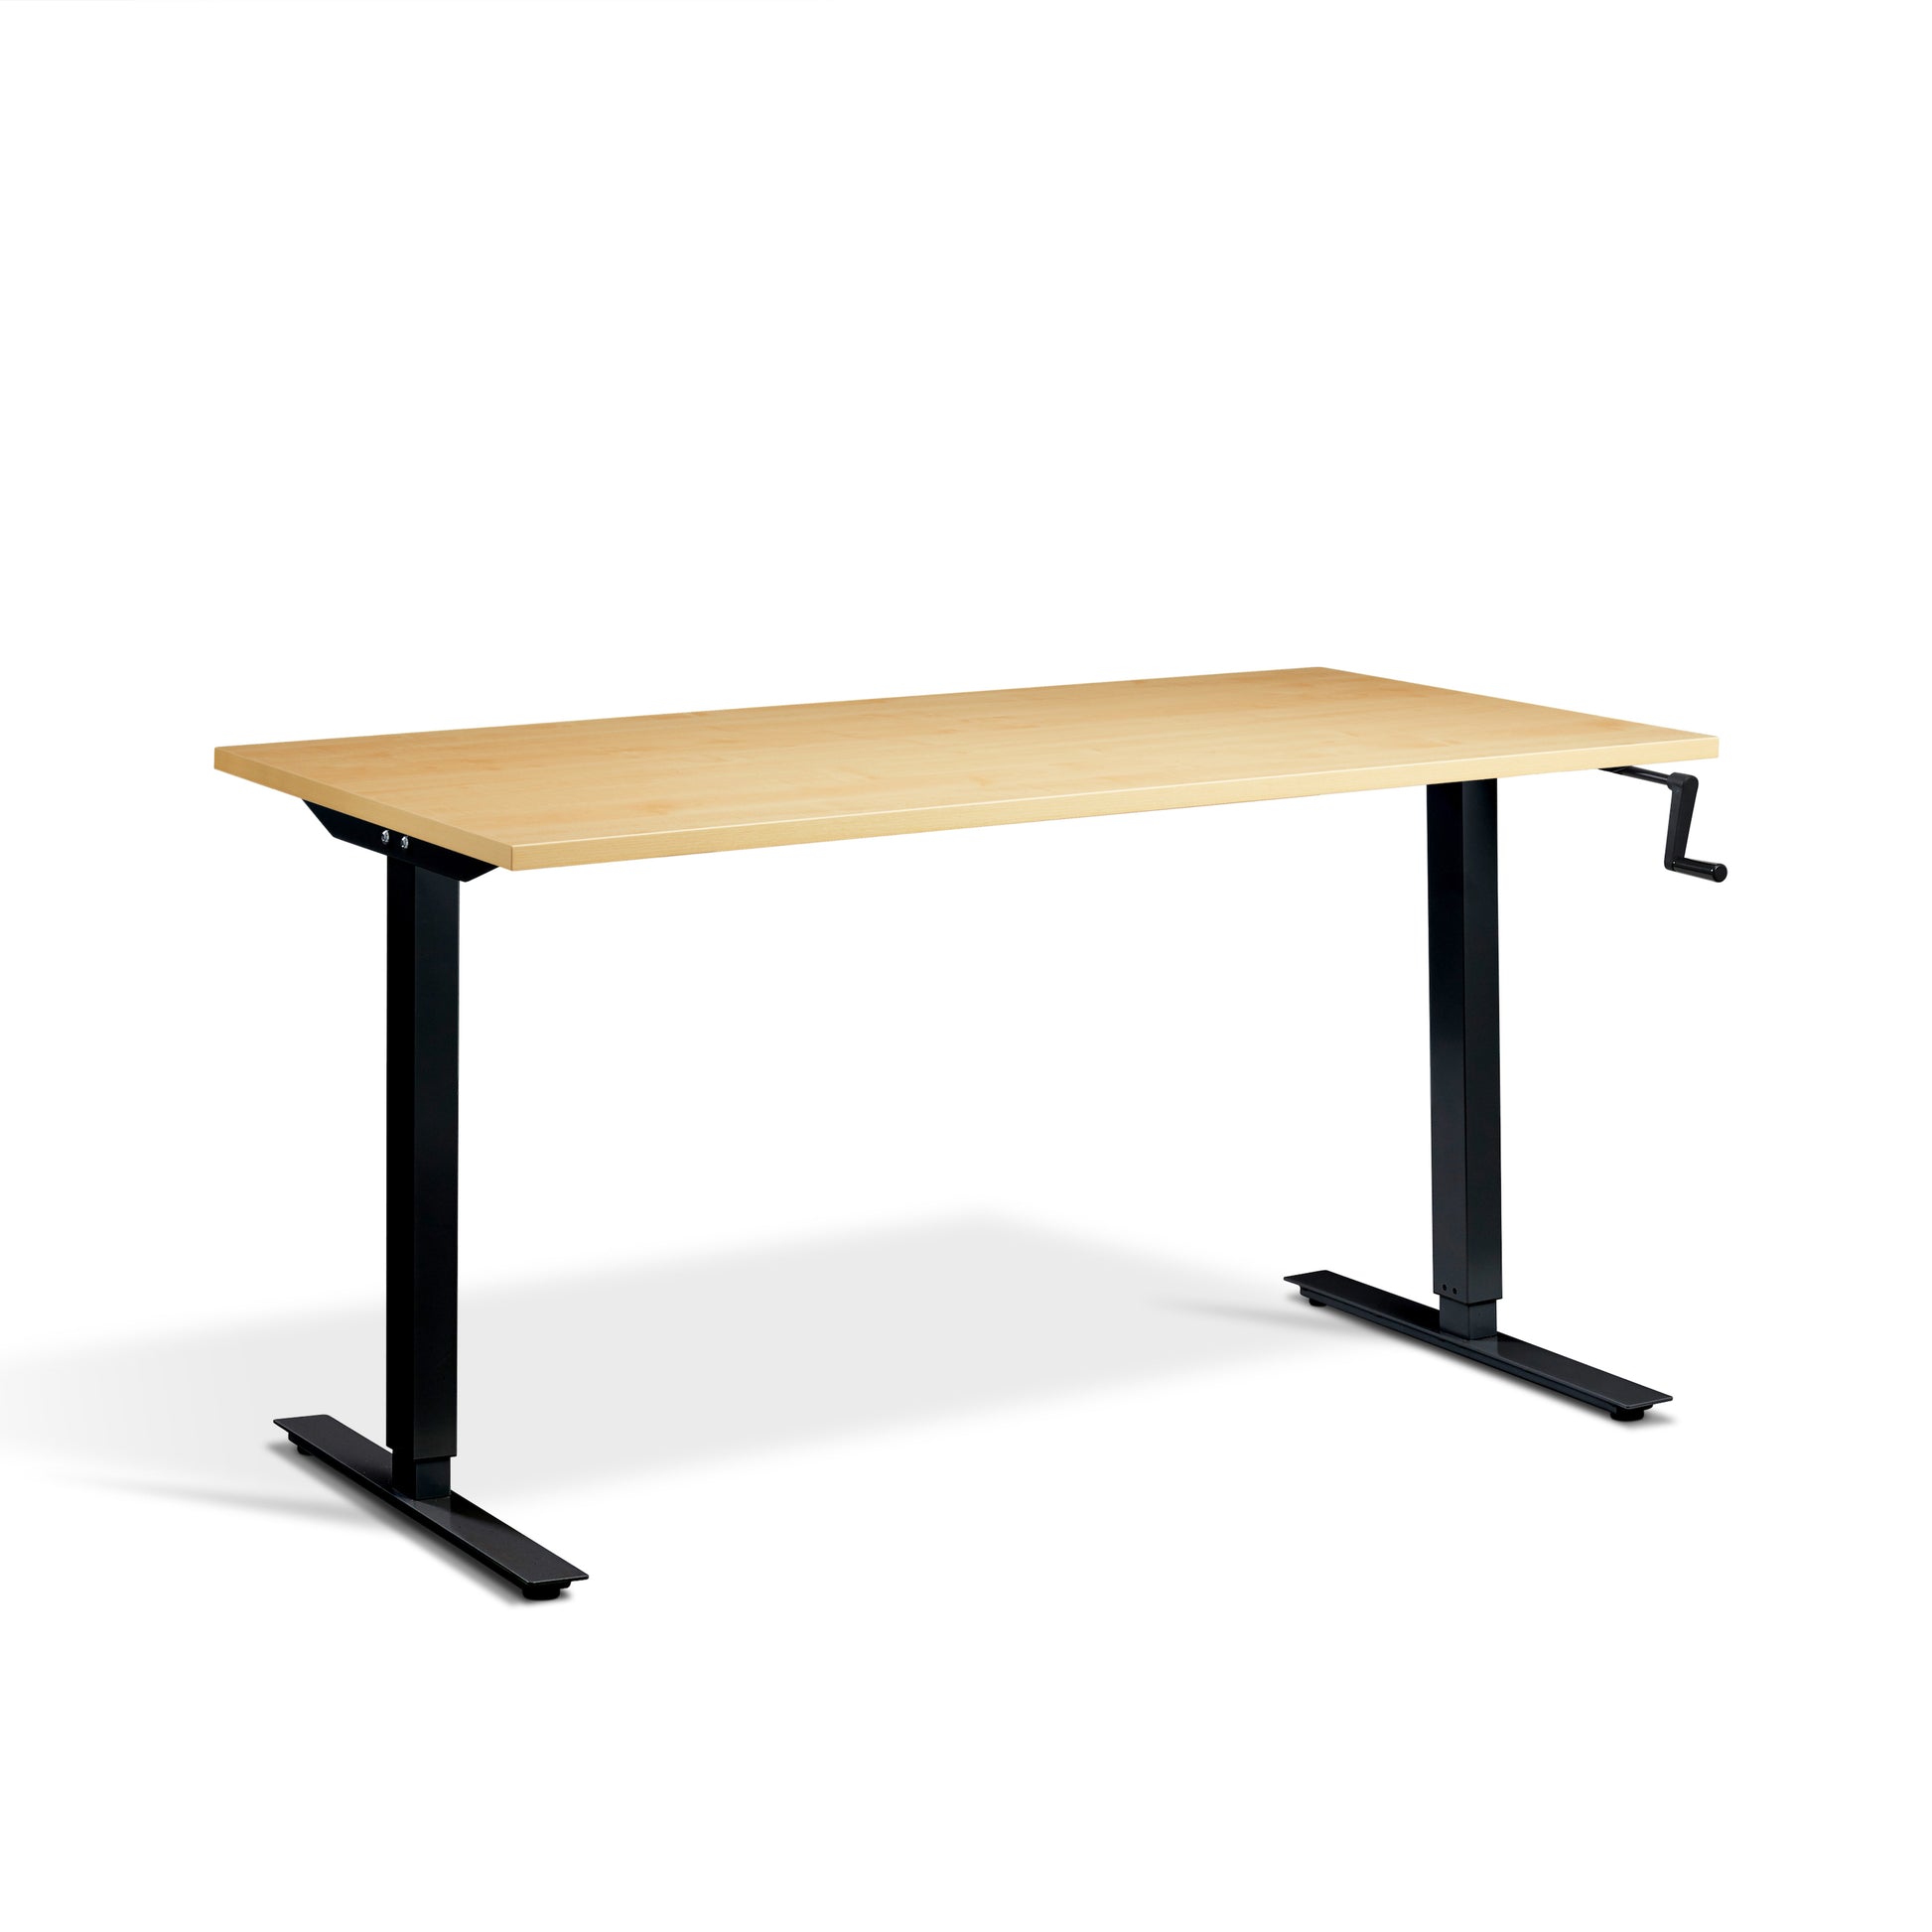 Bowman Manual Sitstand Desk - Oak & Black - Desks - Standing - Manual | Tollo.co.uk  